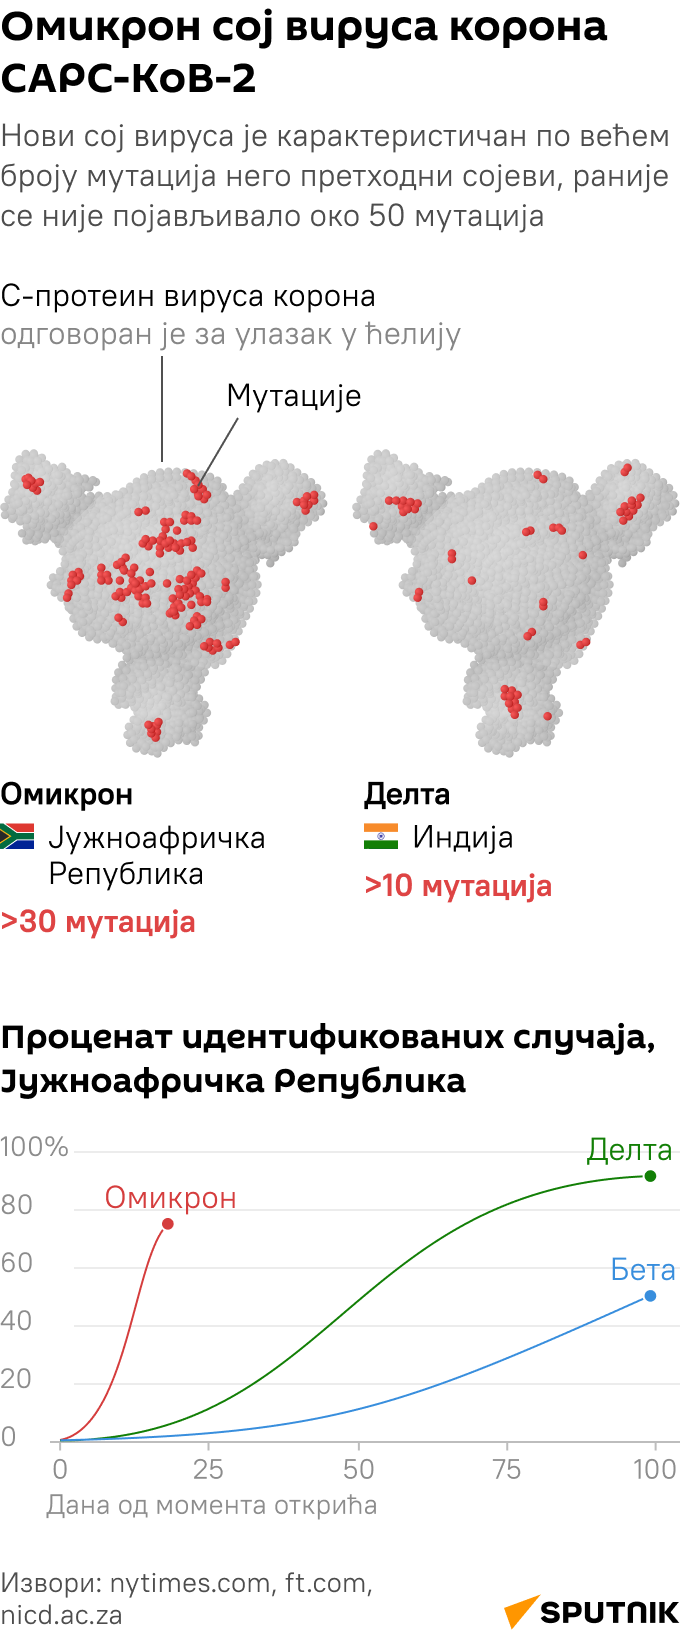 Infografika soja omikron mob - Sputnik Srbija